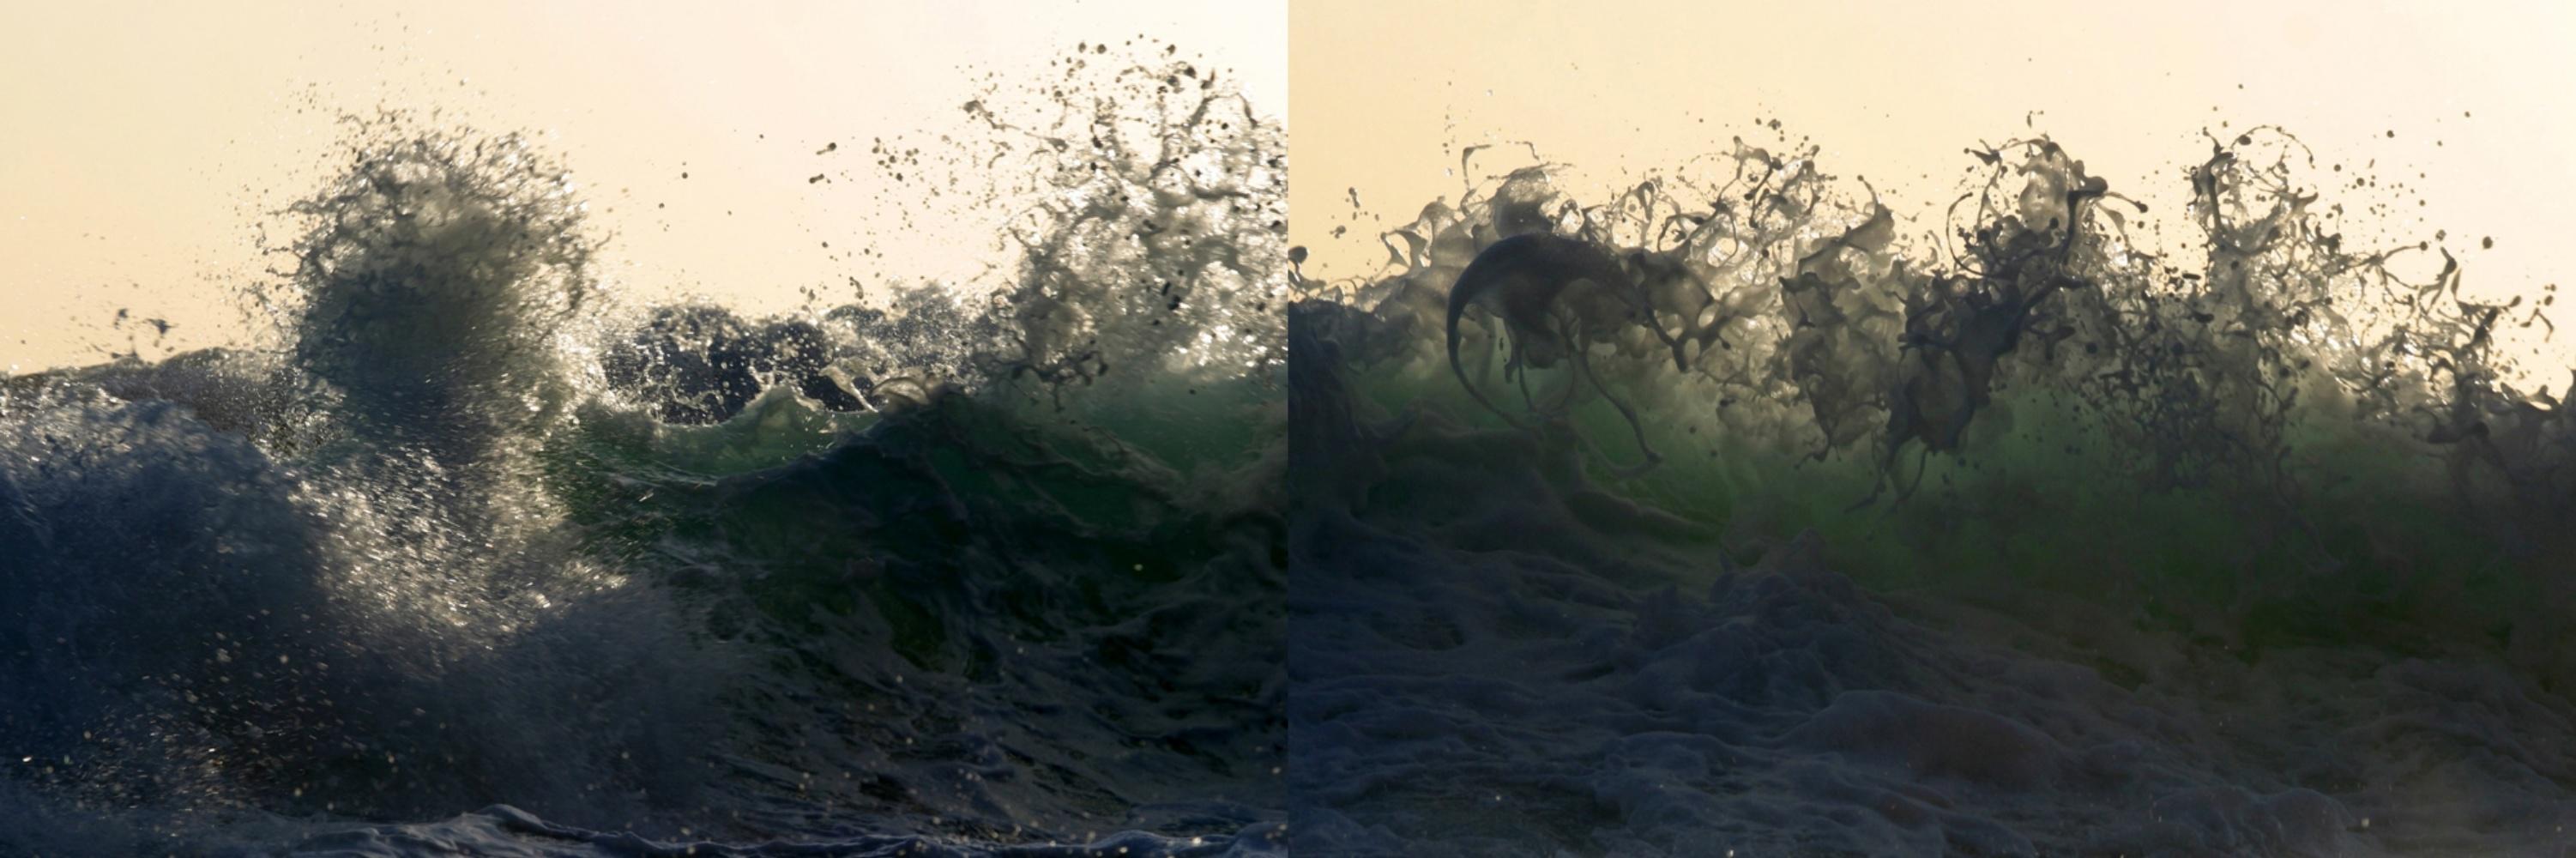 NAMI 025-026 – Syoin Kajii, Japanese Photography, Ocean, Waves, Water, Nature